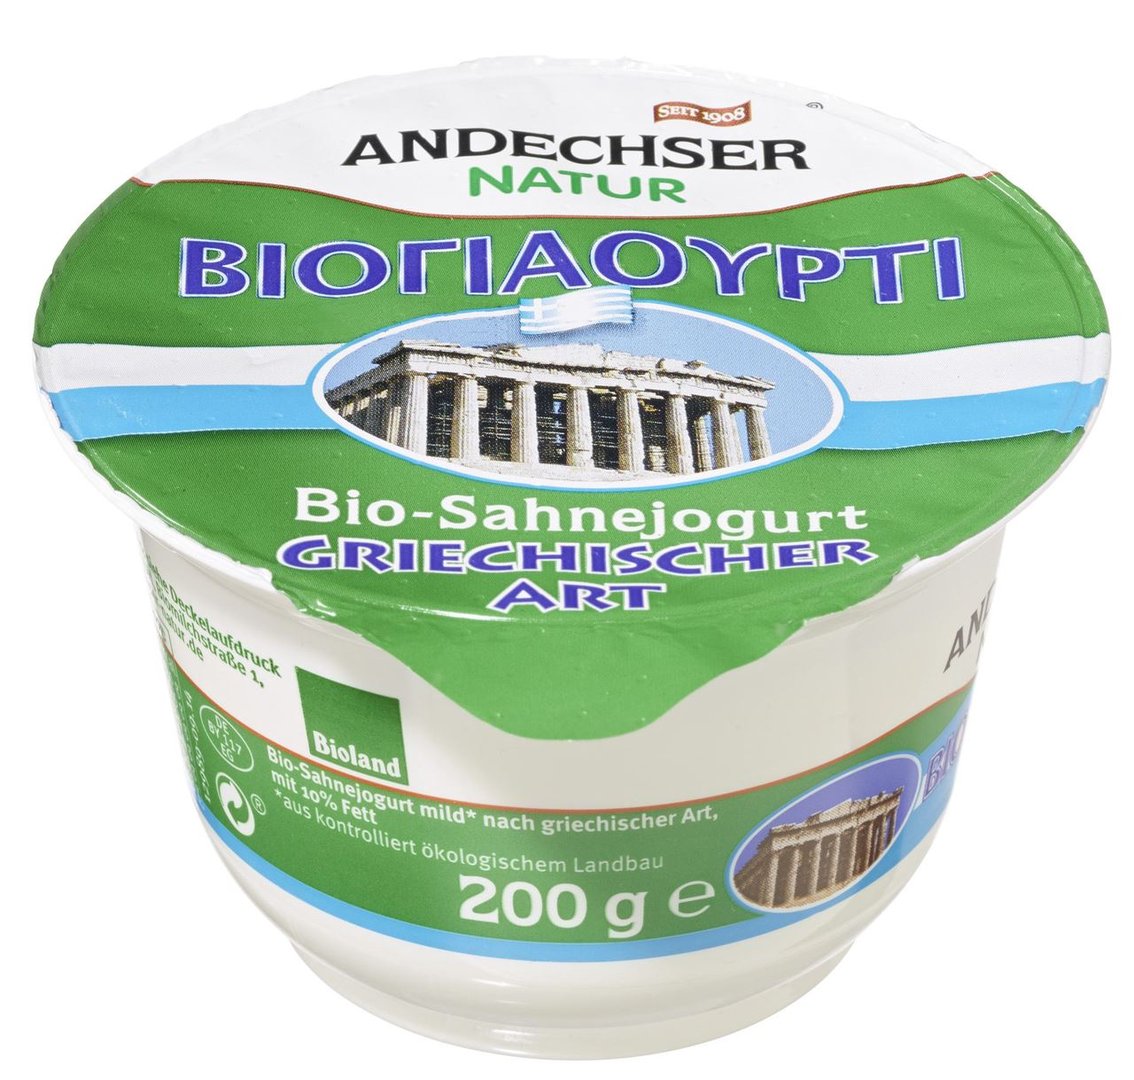 Andechser - Bio Sahnejoghurt griechischer Art 10 % Fett - 200 g Becher